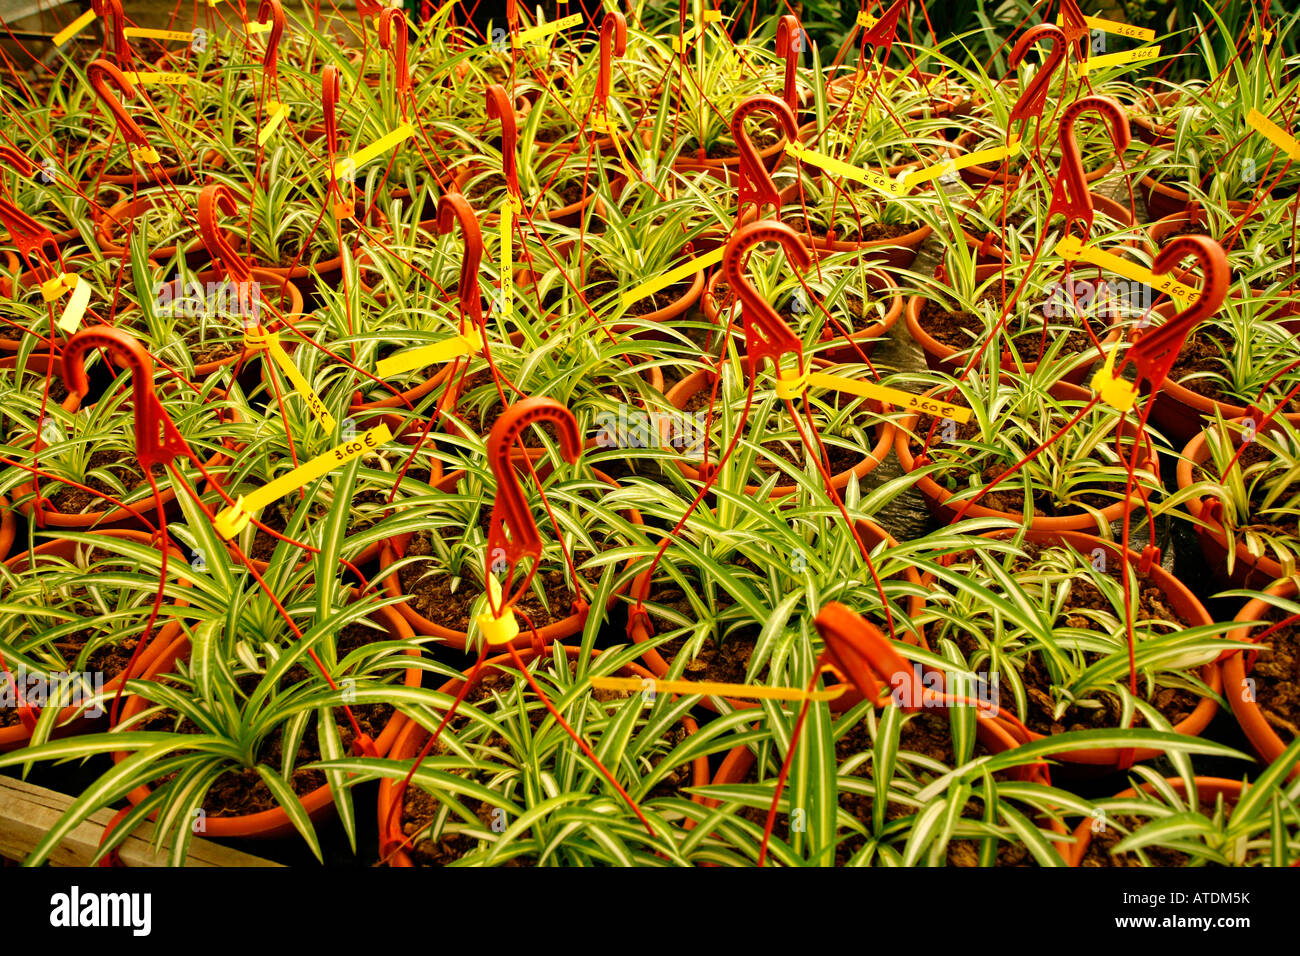 Spider Plant For Sale Chlorophytum Comosum Stock Photo Alamy,Robo Dwarf Hamster Pictures